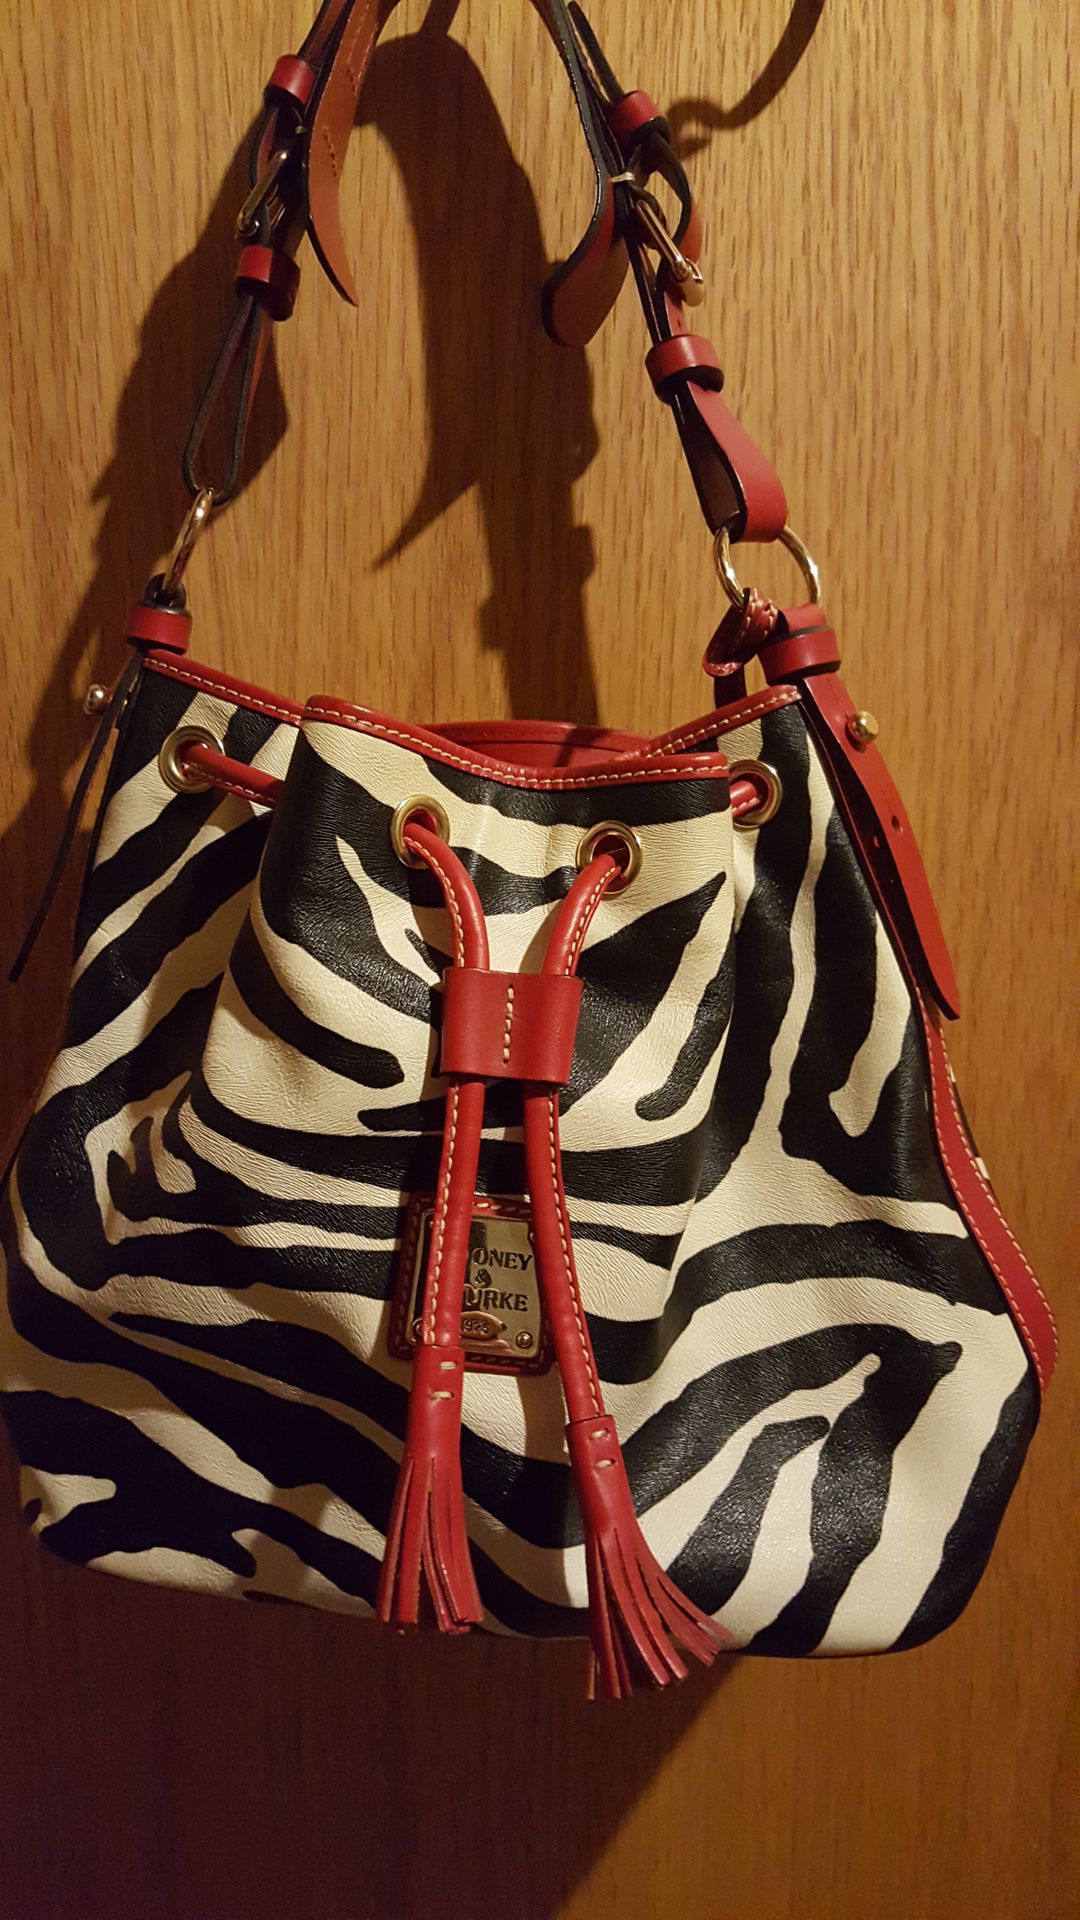 Dooney&Burke Drawstring Serengeti Zebra Leather Bucket Bag Purse AND Matching New Wallet